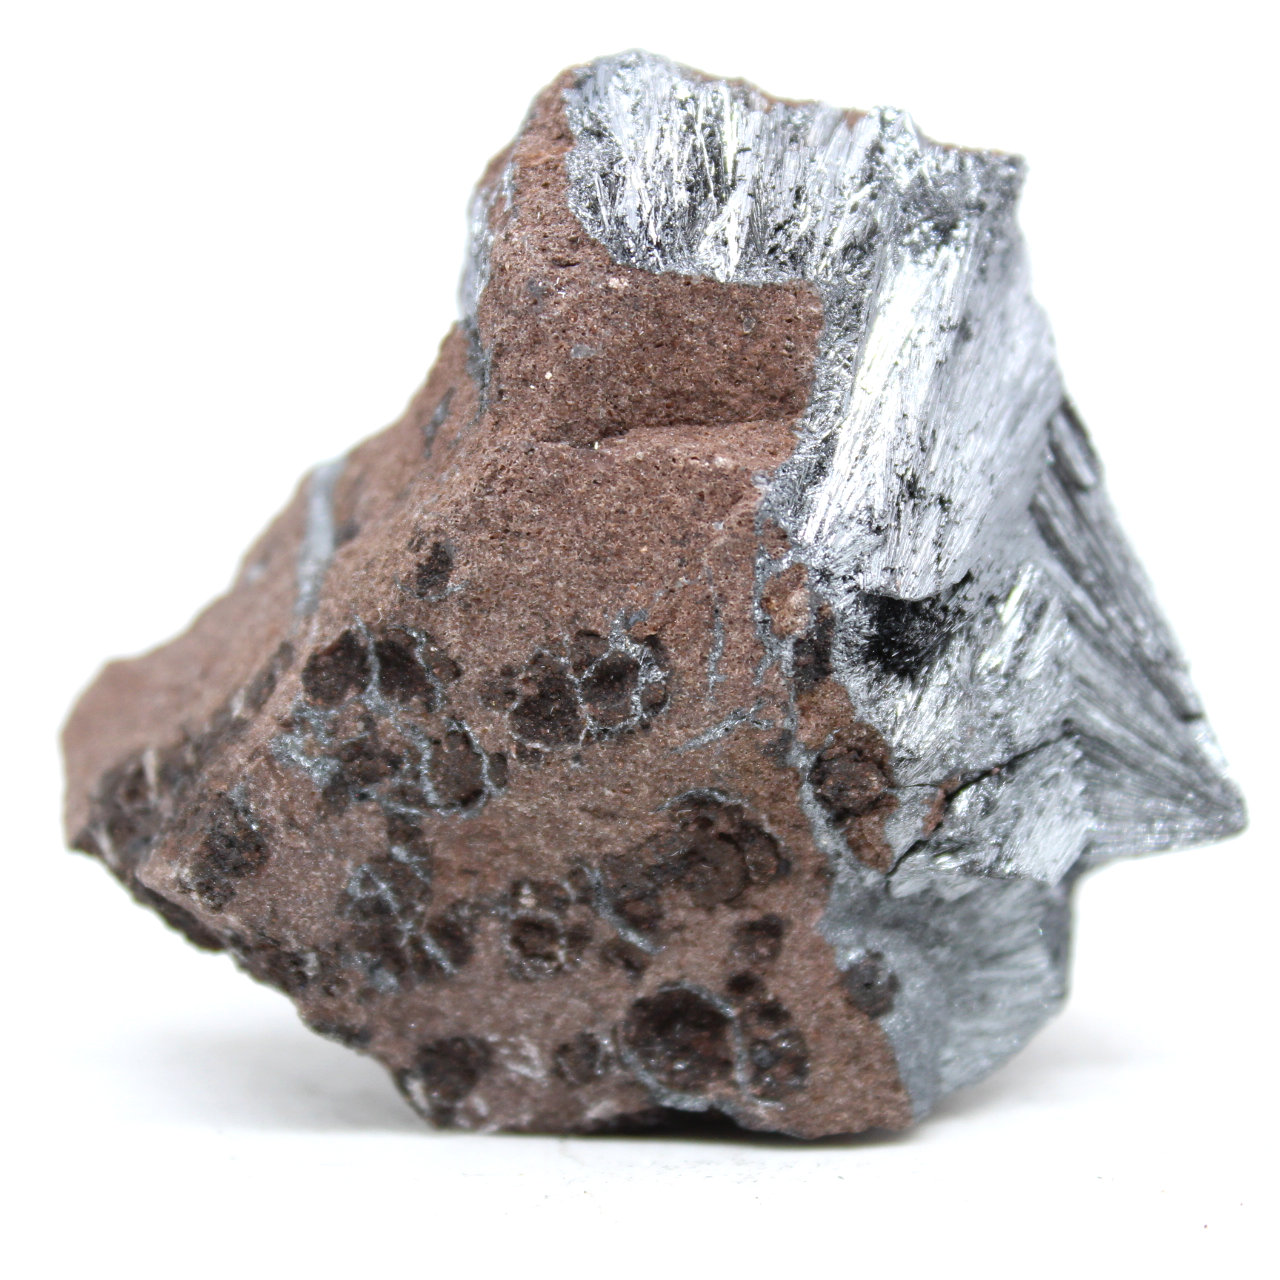 Raw crystallized pyrolusite